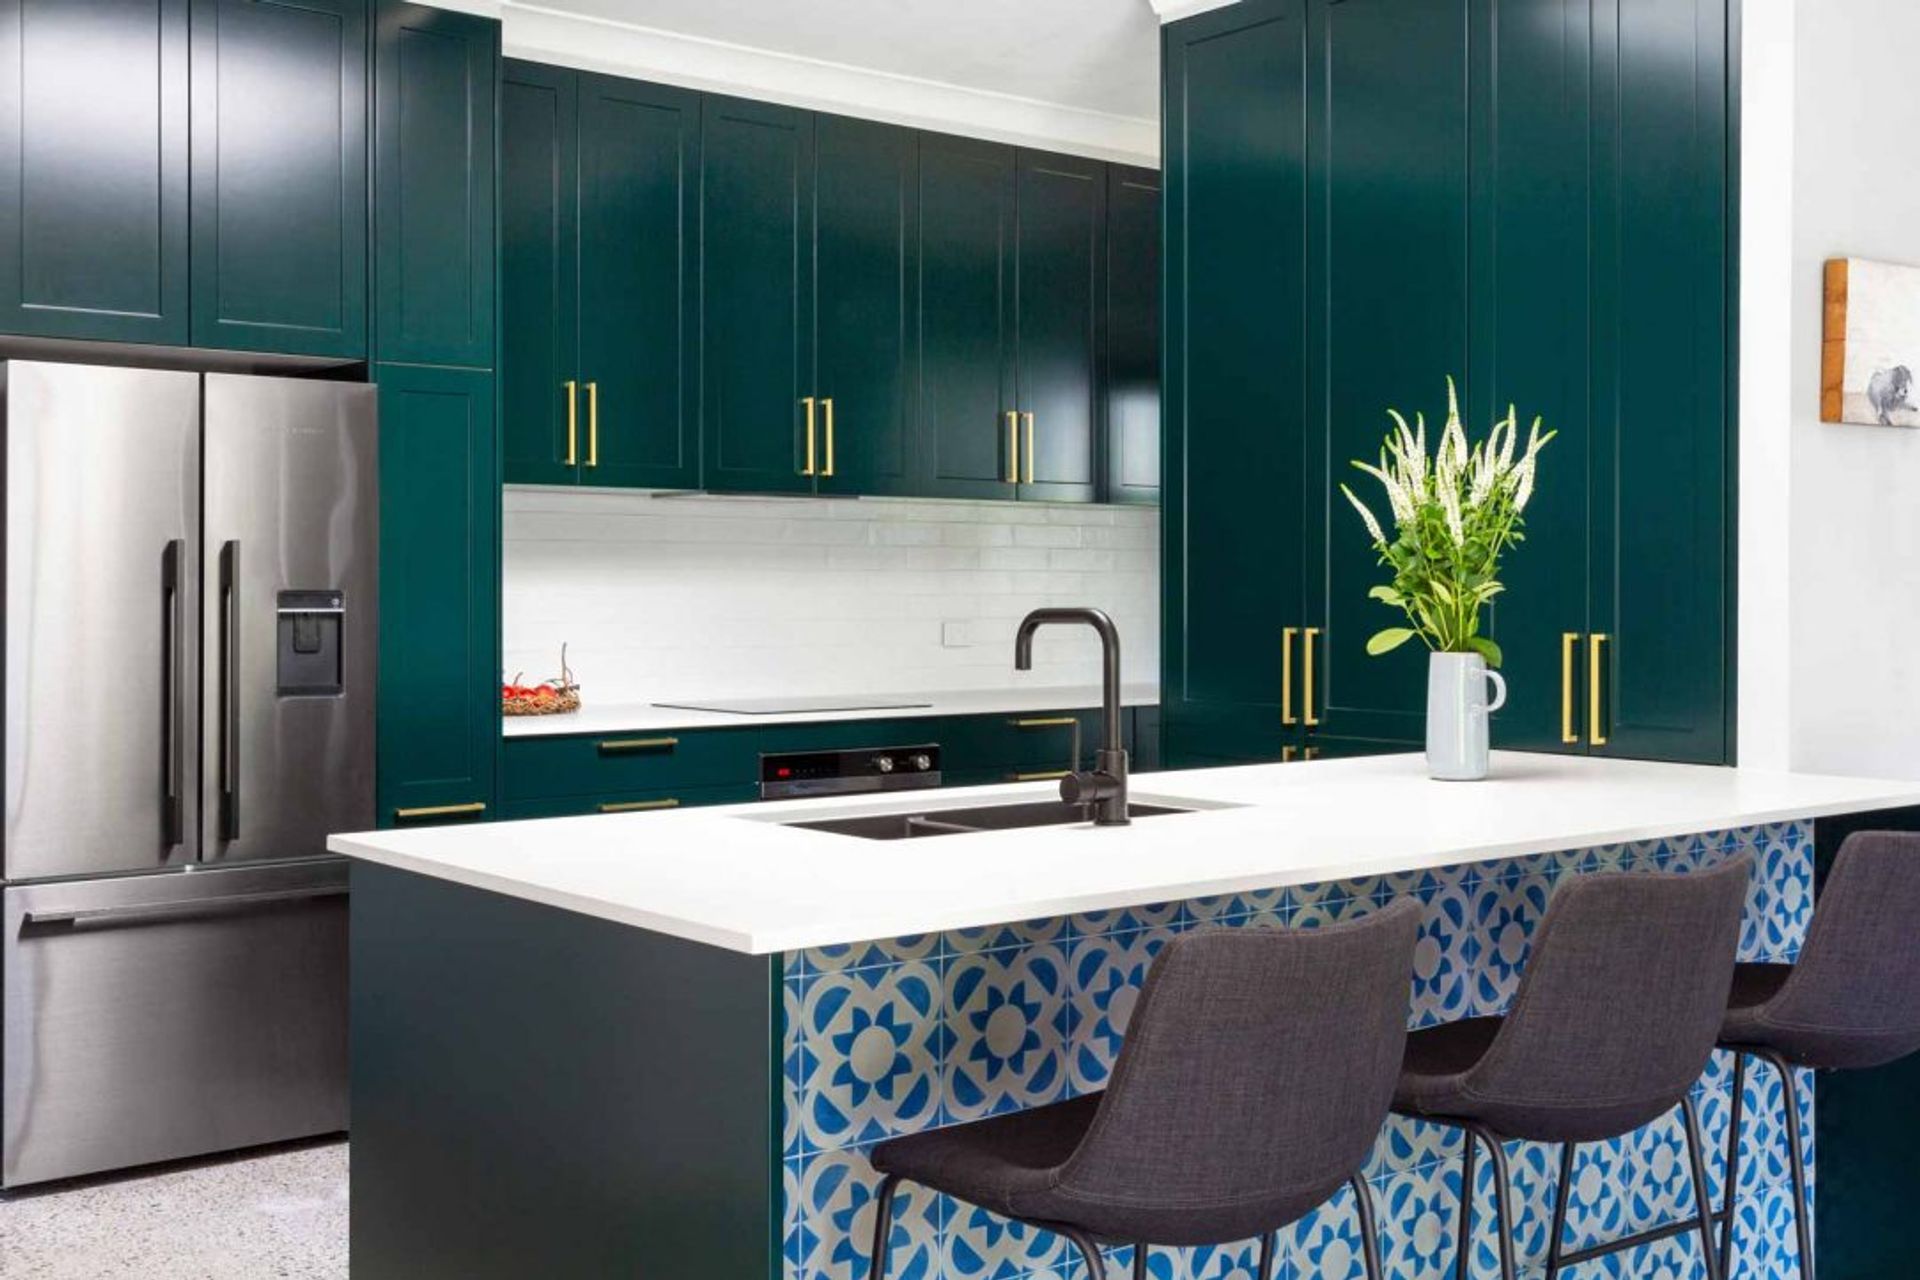 caesarstone-kitchen-design-sydney-green-white-luxury-premier-kitchens-statuario-maximus-04-1084x723.jpg